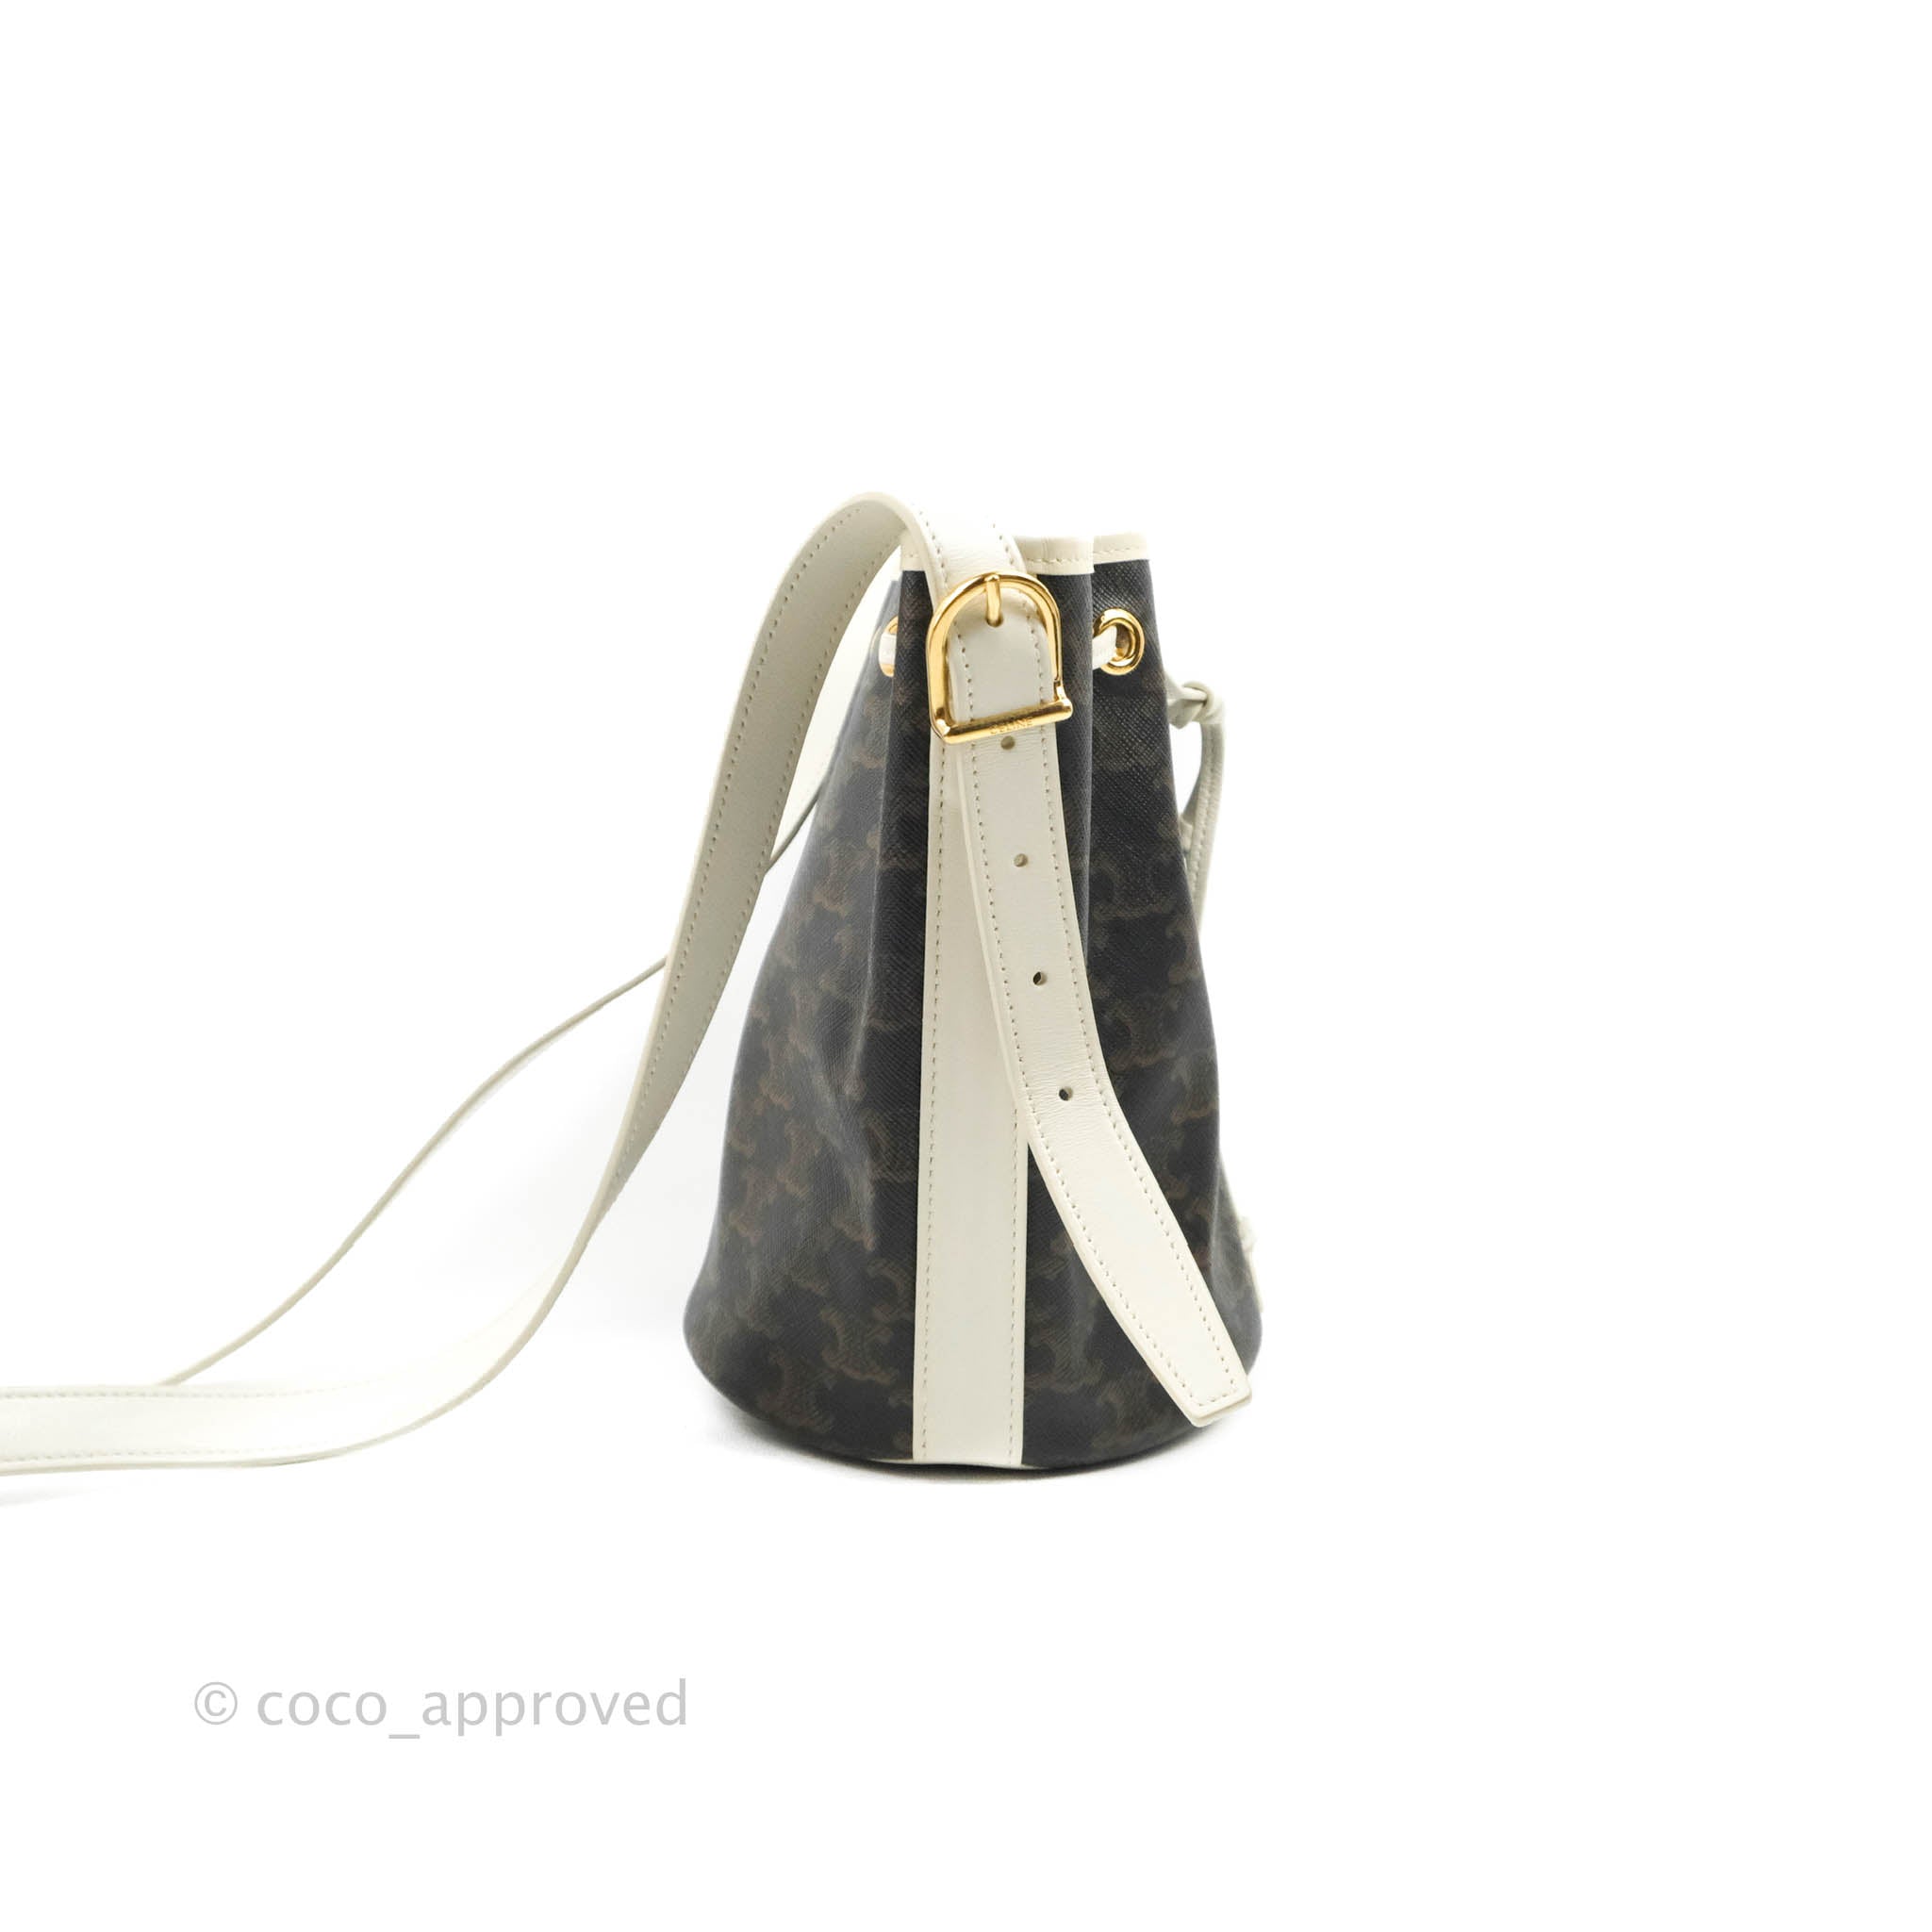 Cream Speedy Bandoulière 20 - Leather Crossbody Bag for Women